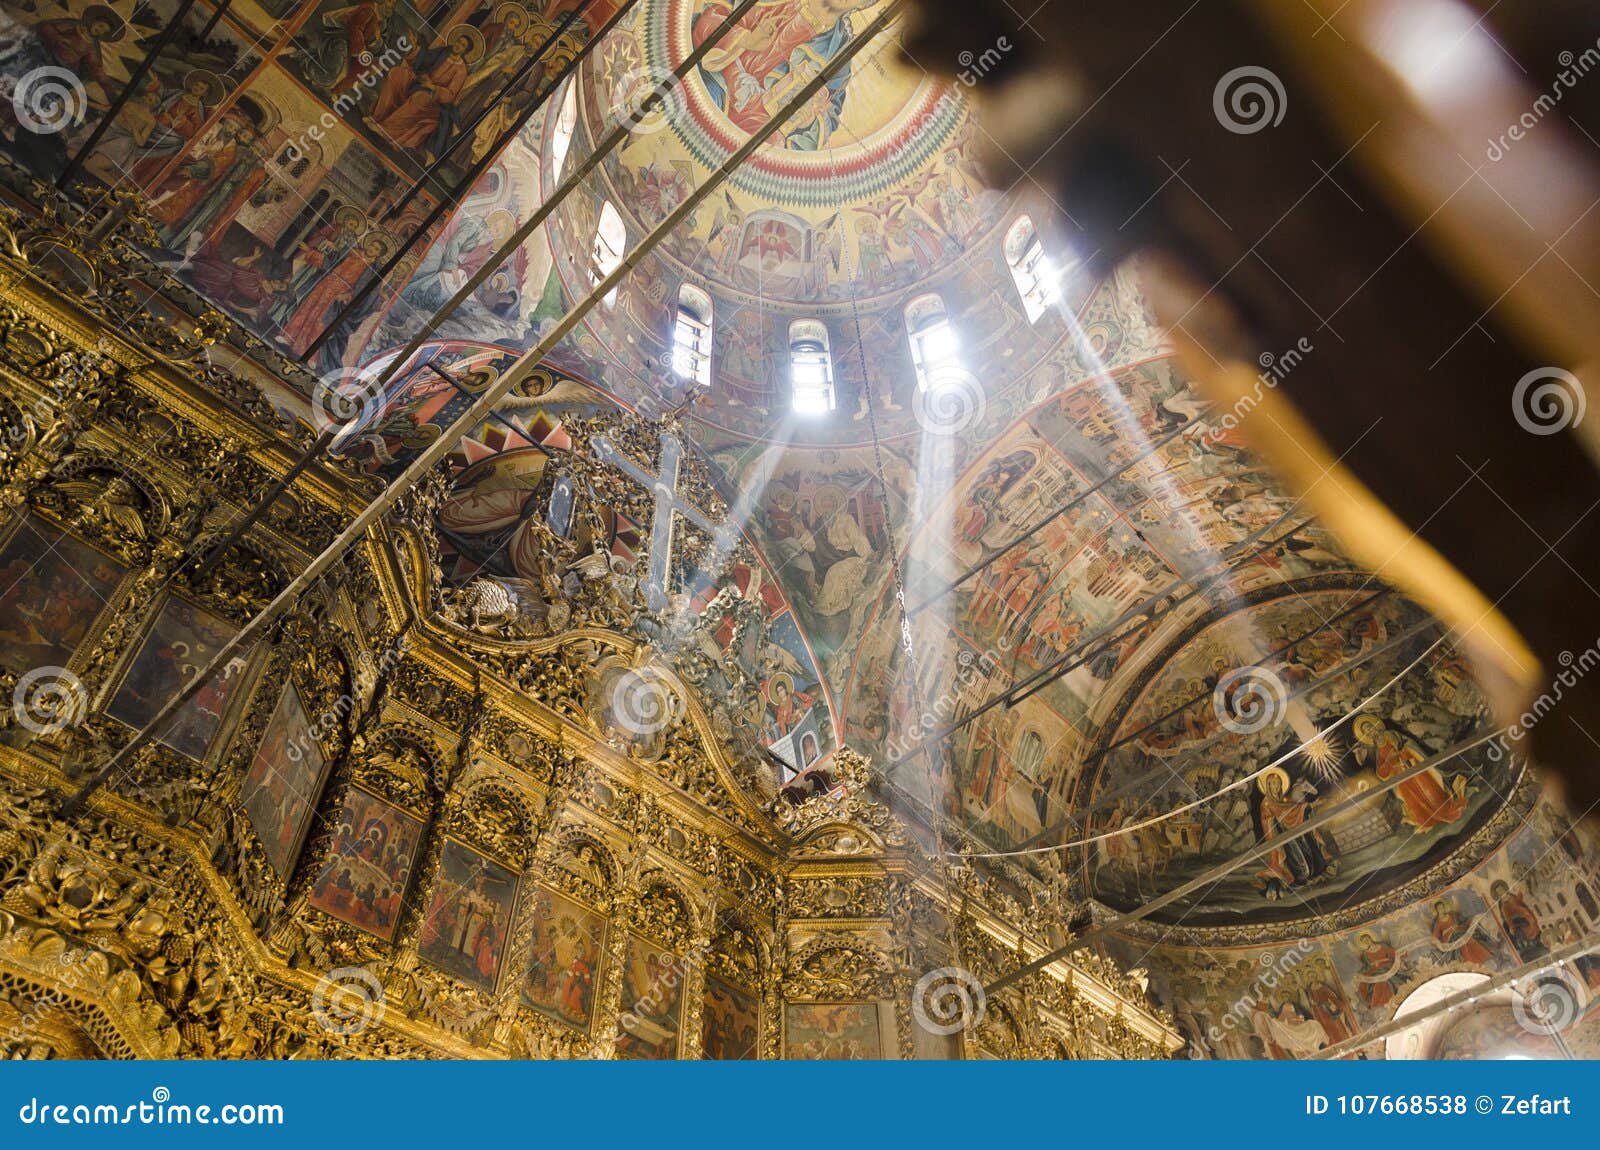 rila monastery church ceiling paintings interior, historical monastery in bulgaria